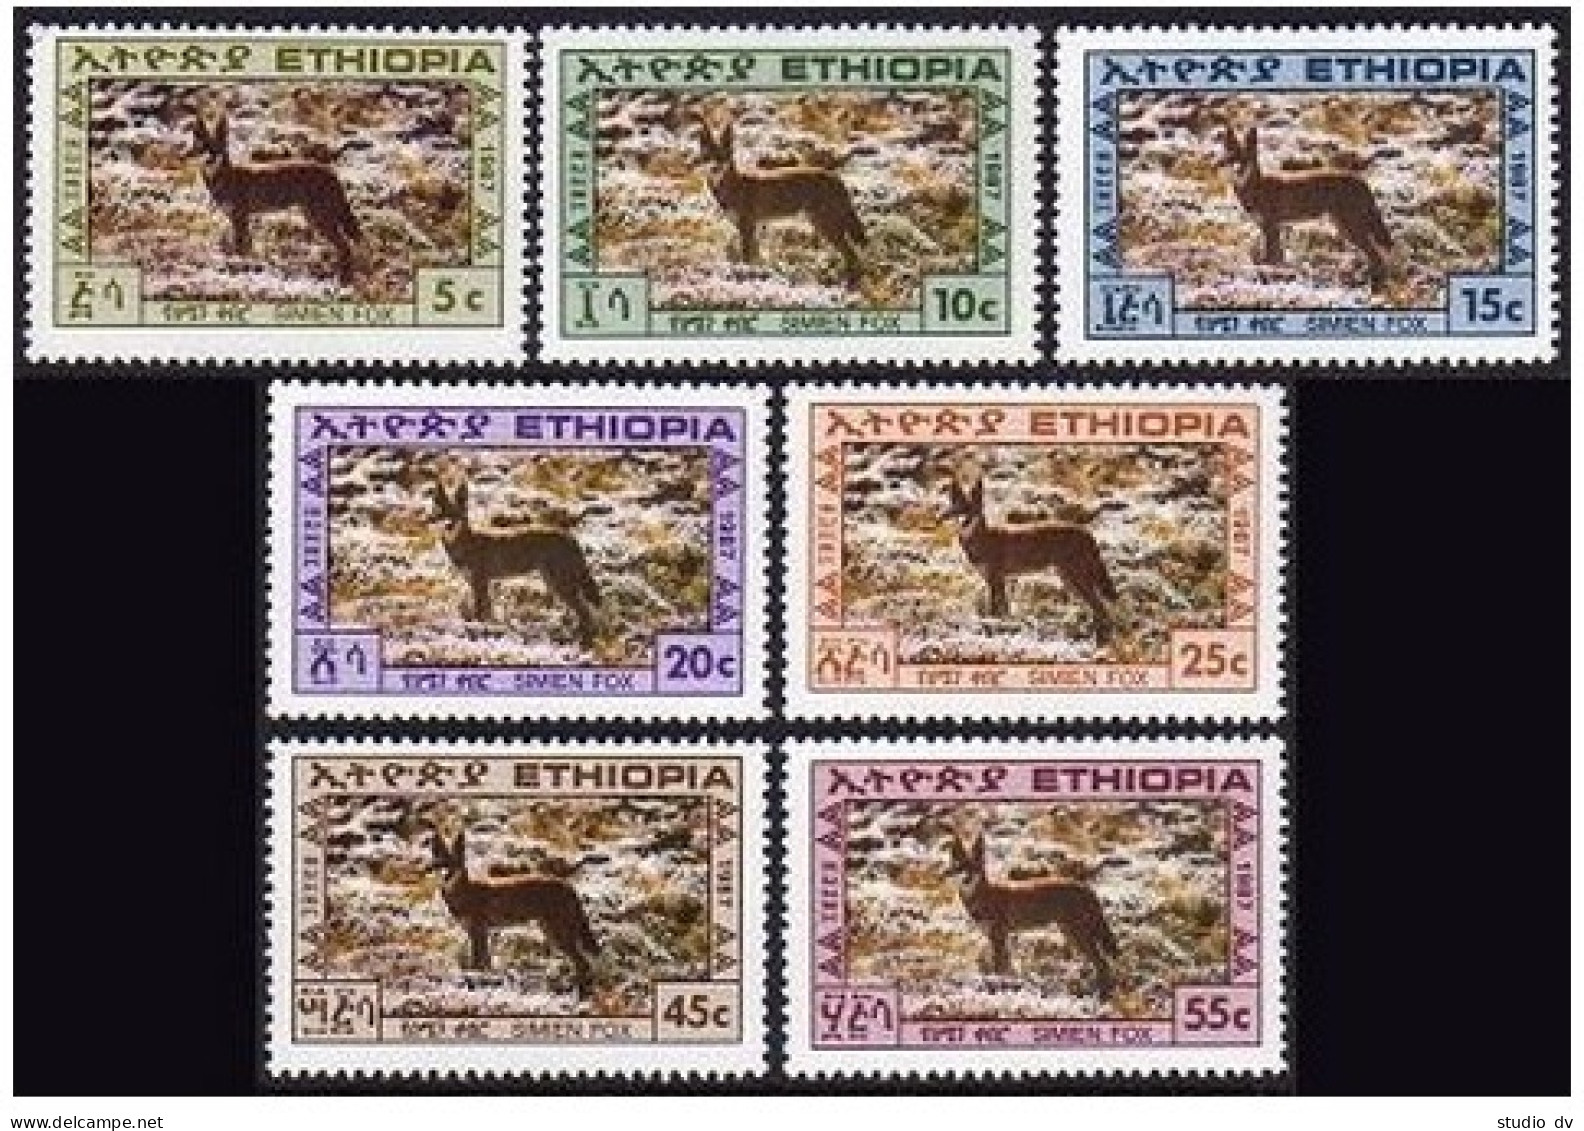 Ethiopia 1178-1184, MNH. Michel 1264-1270. Simien Fox, 1987. - Ethiopia